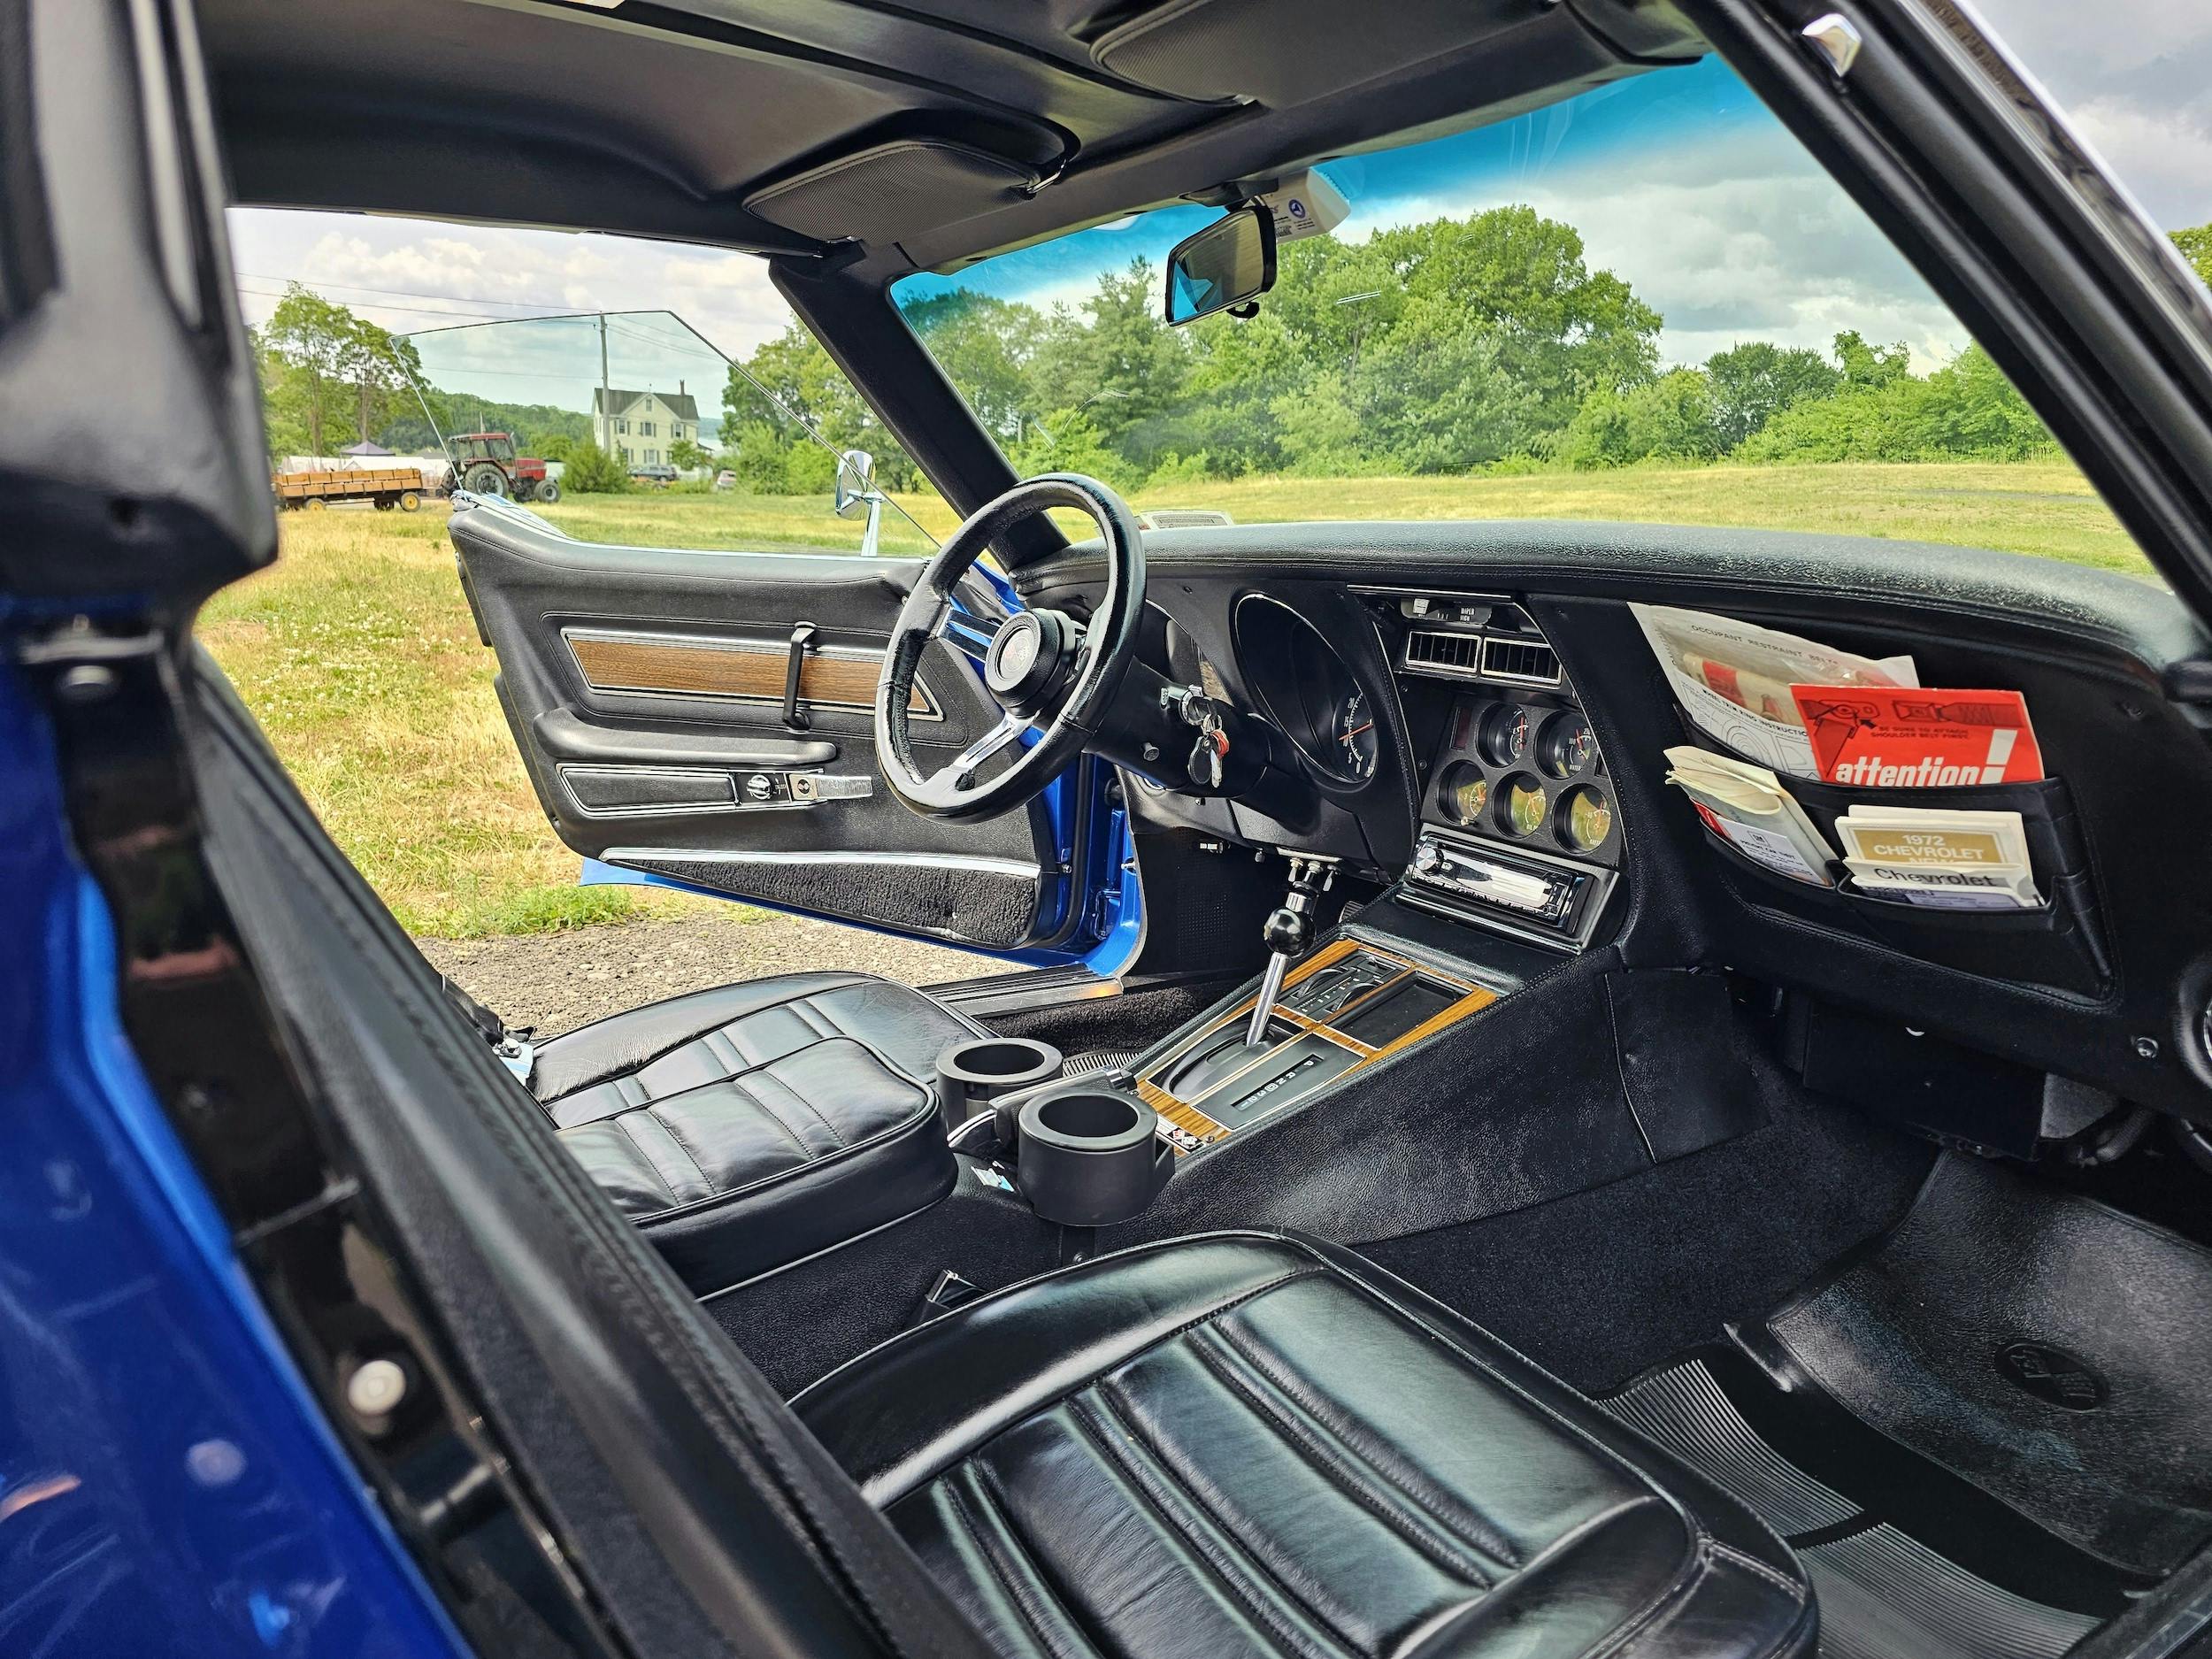 1972 Corvette Stingray interior dash